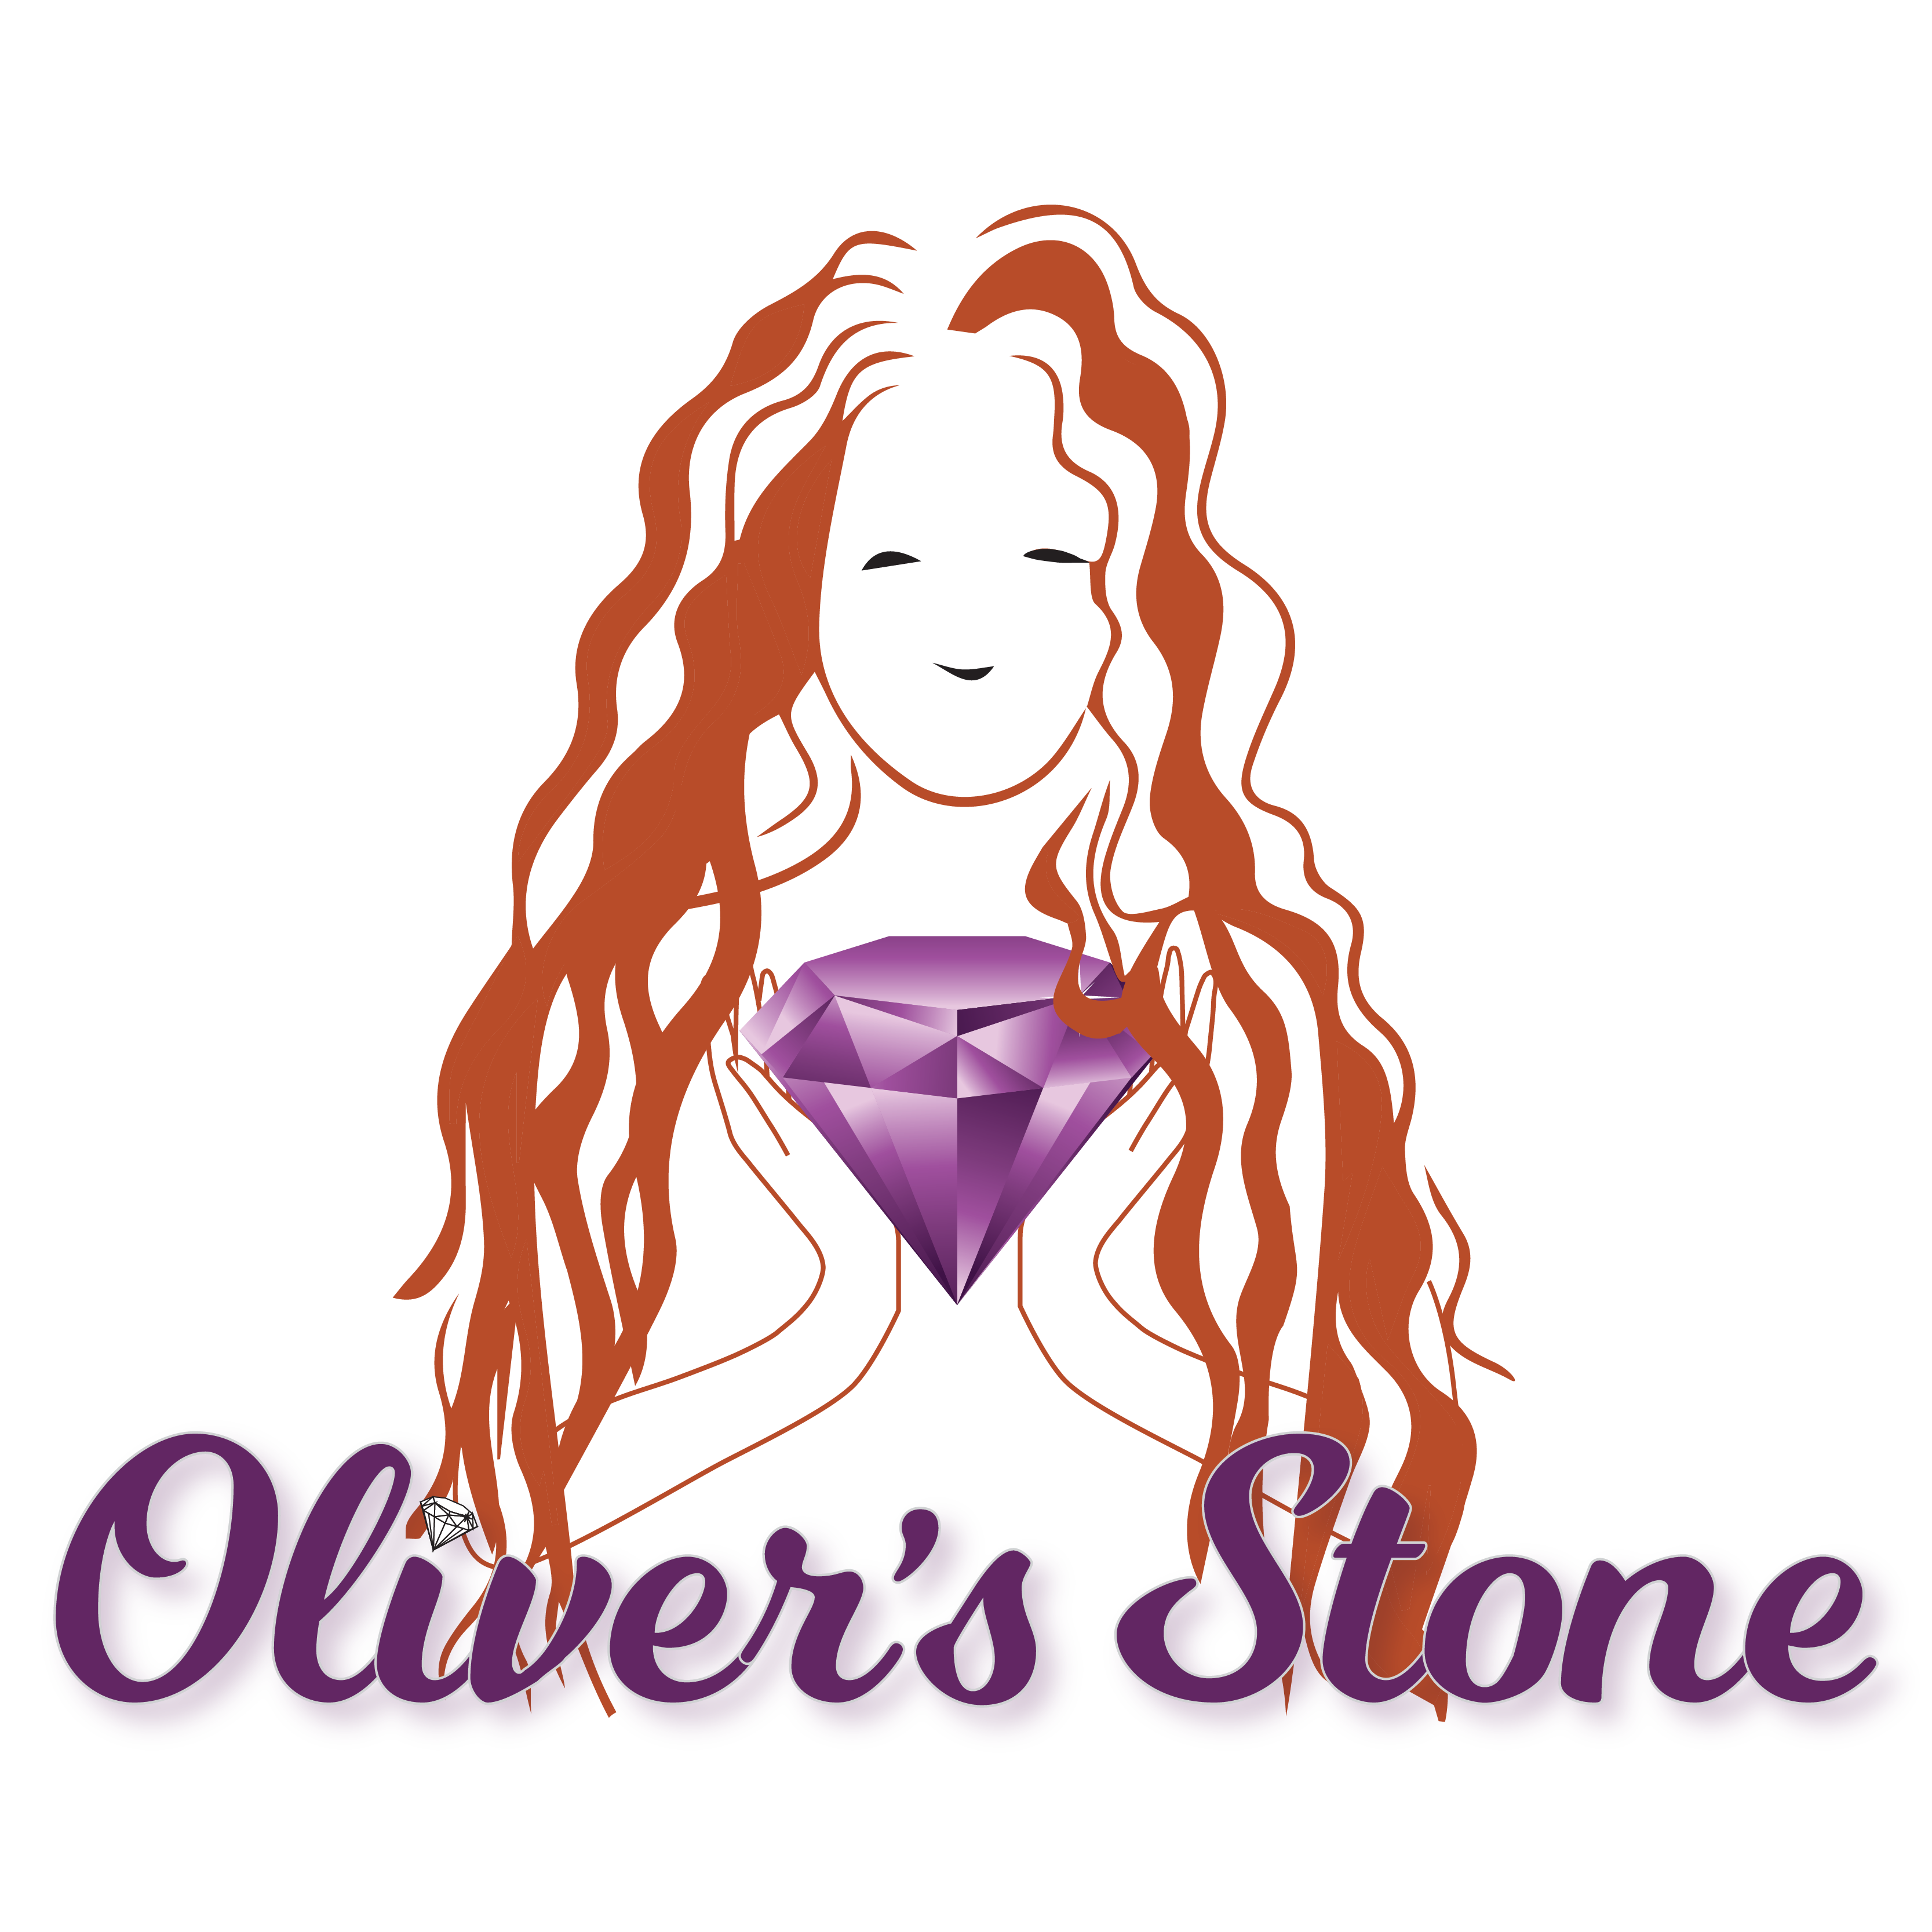 Oliver's Stone